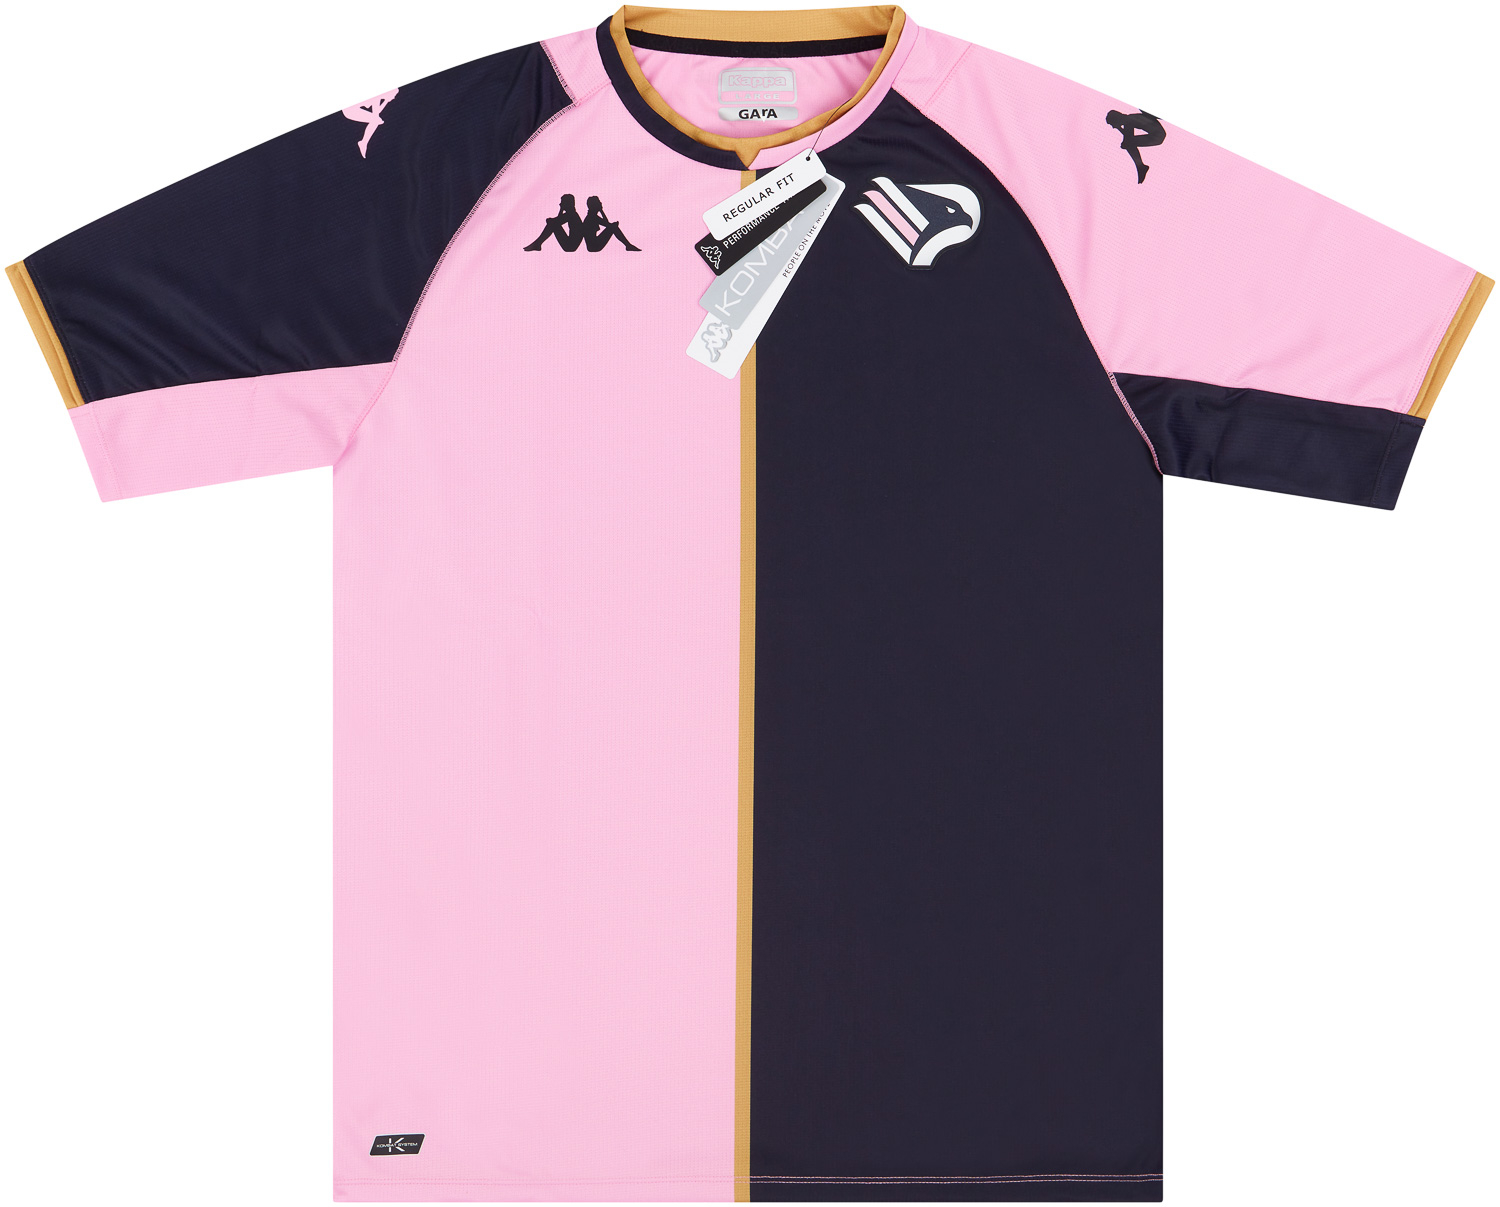 Palermo 2020-21 Home Kit